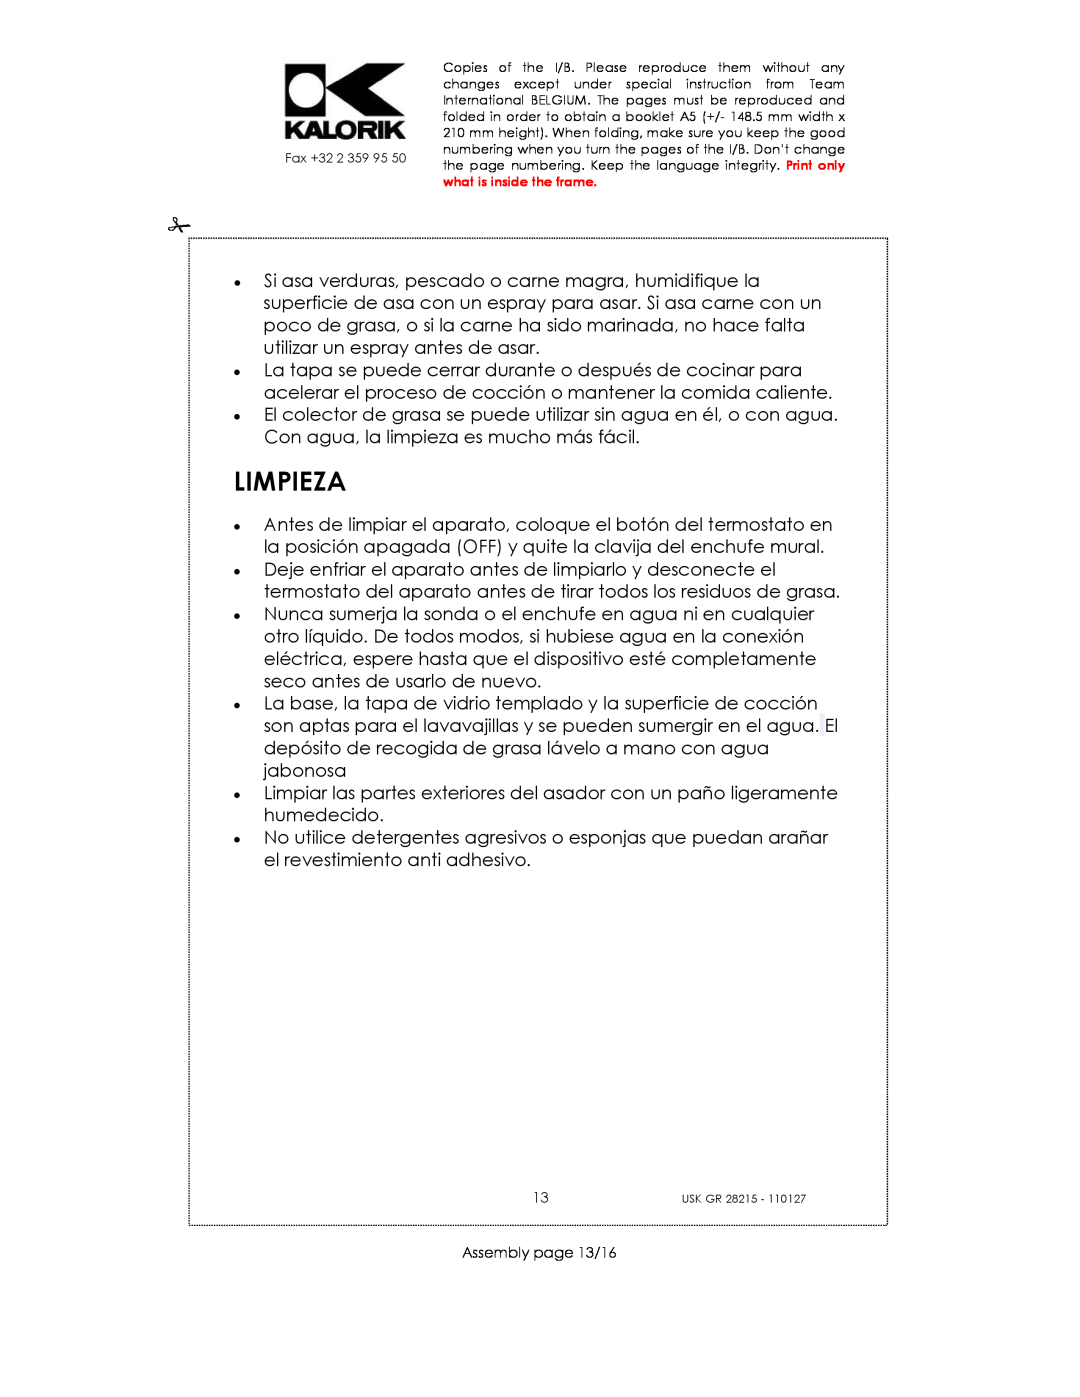 Kalorik USK GR 28215 manual Limpieza, Assembly page 13/16 